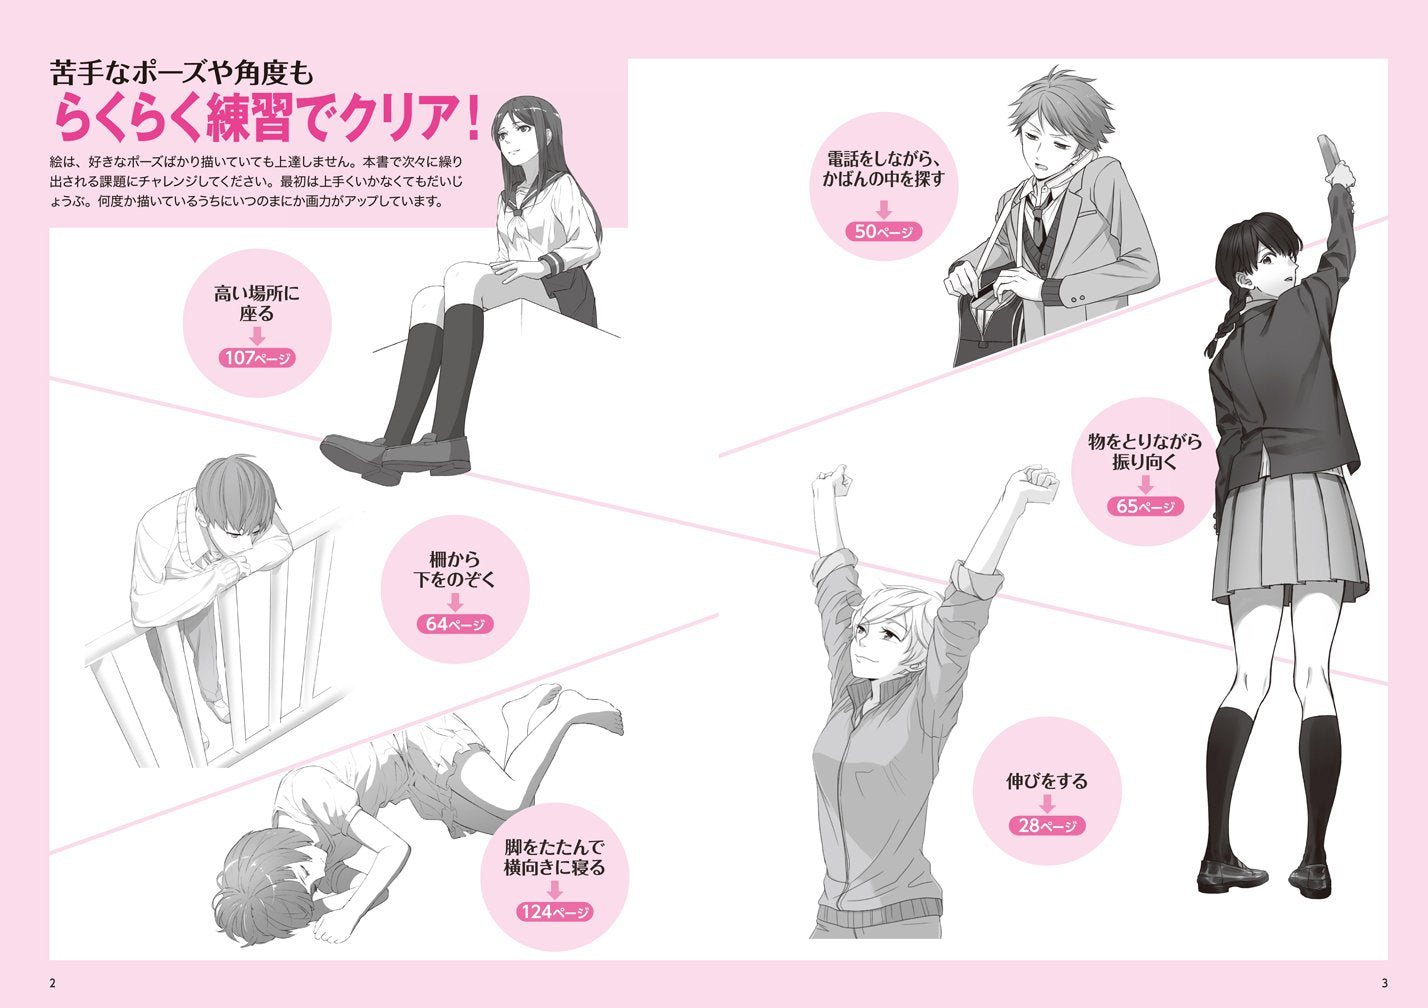 Manga Character Intensive Training Basic Actions